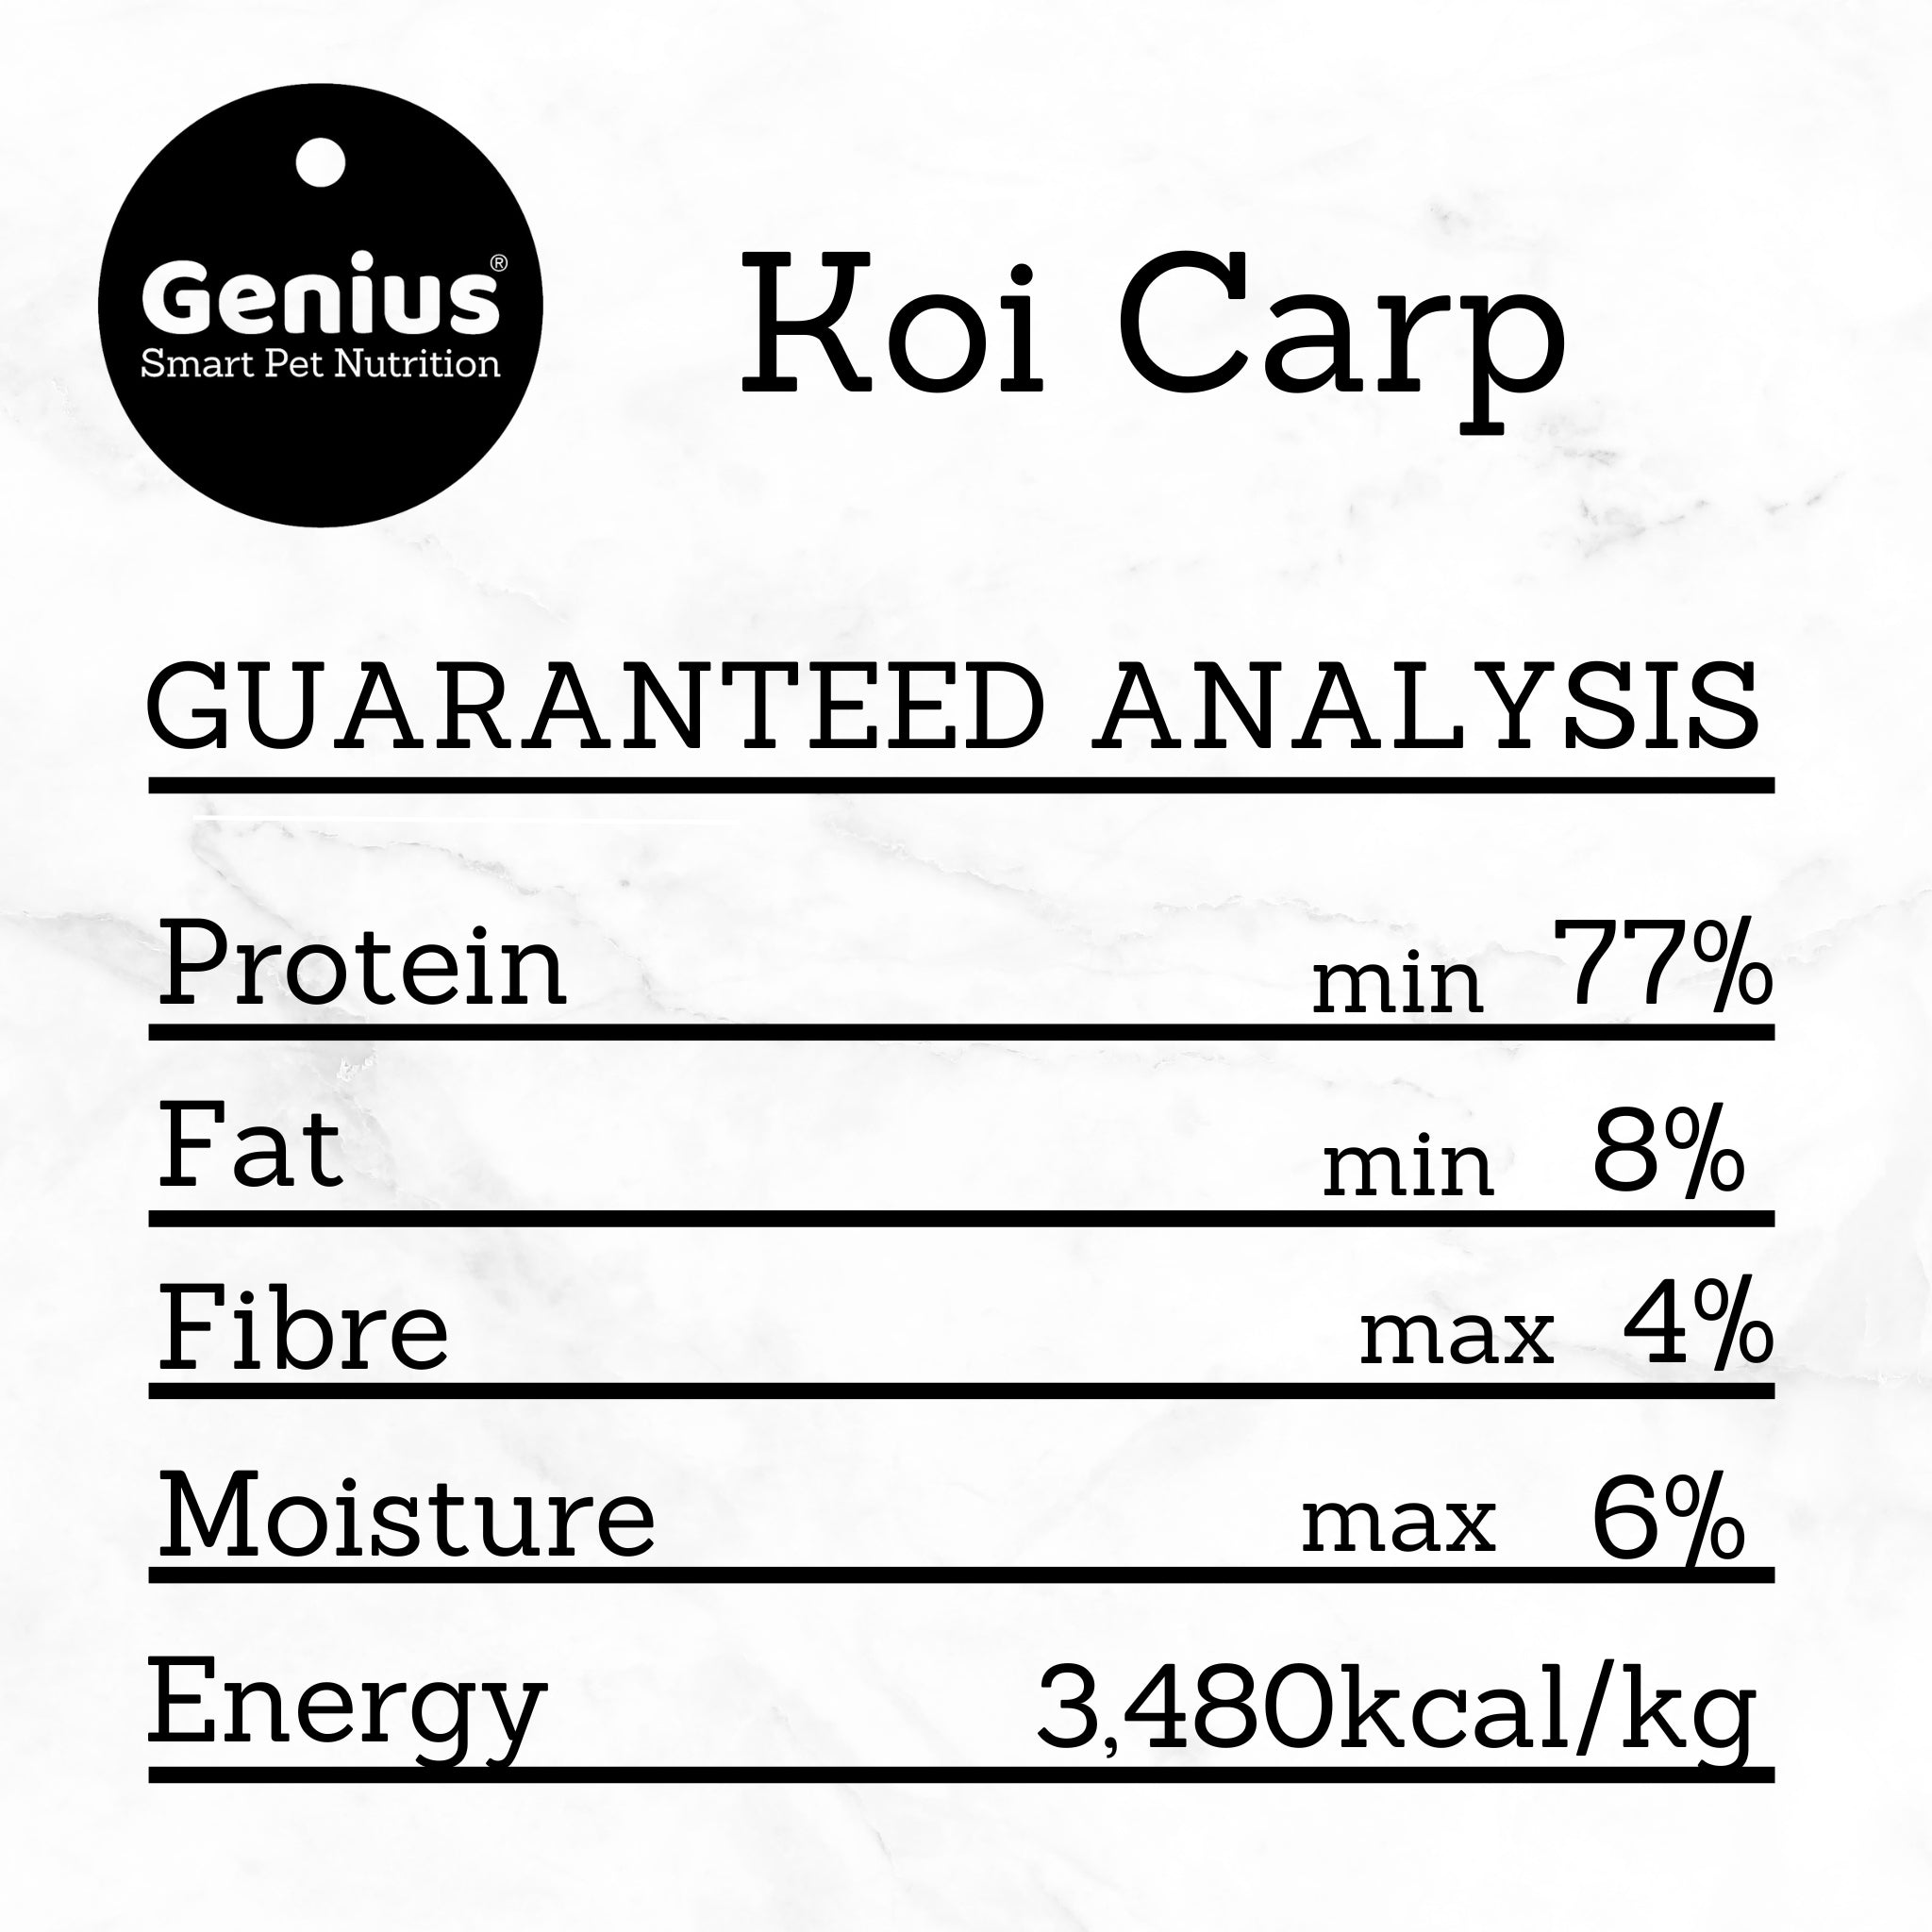 Guaranteed analysis for Koi Carp freeze dried dog and cat treats